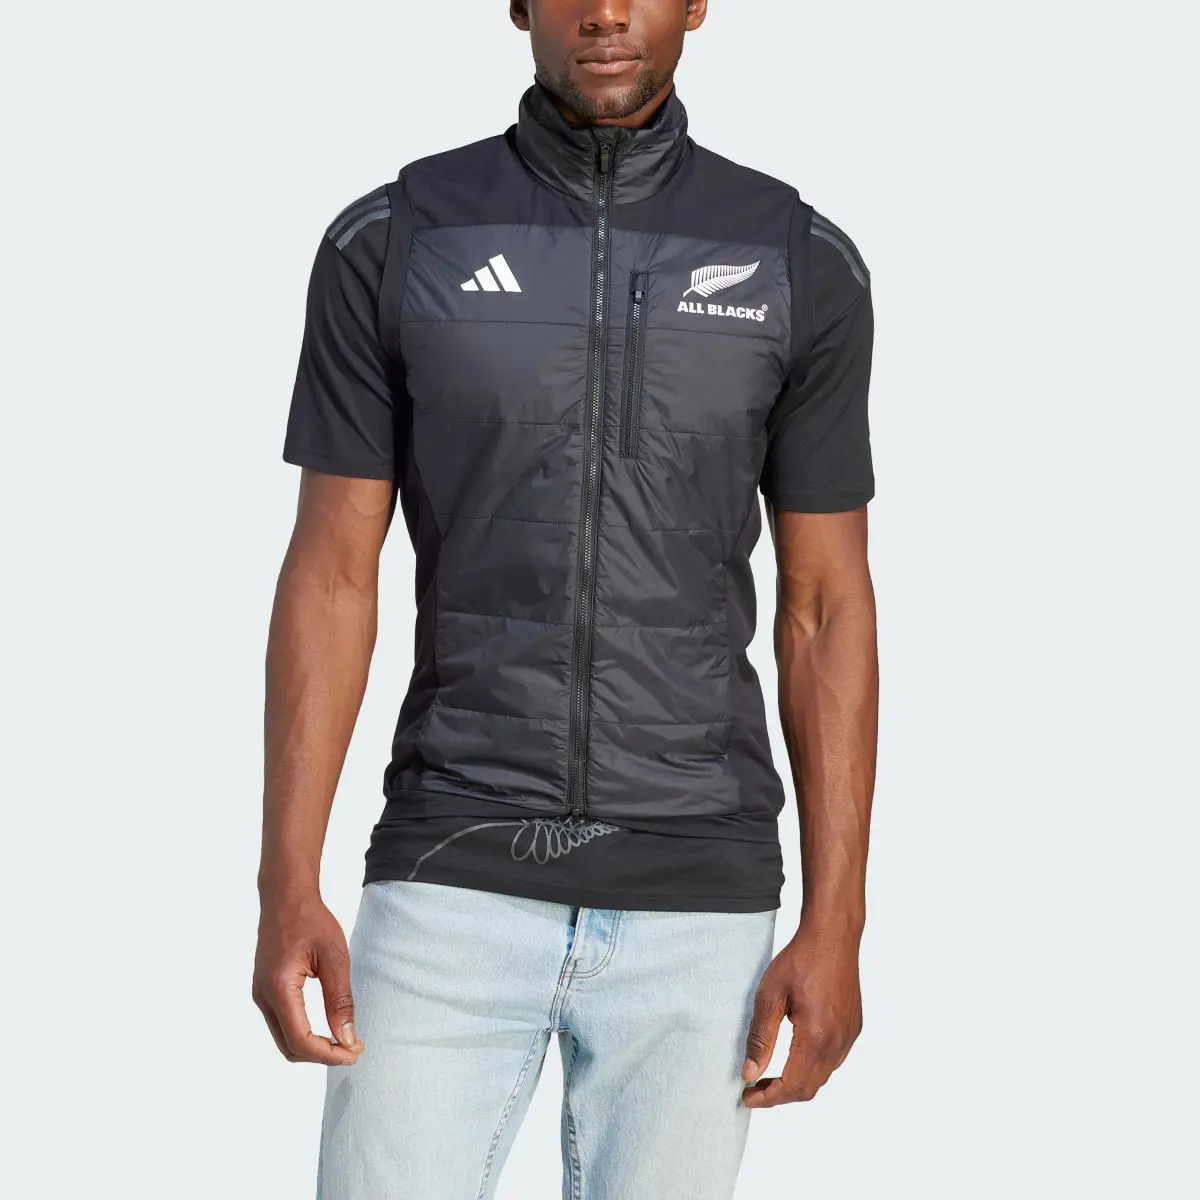 Adidas All Blacks Rugby Filled Vest. 1